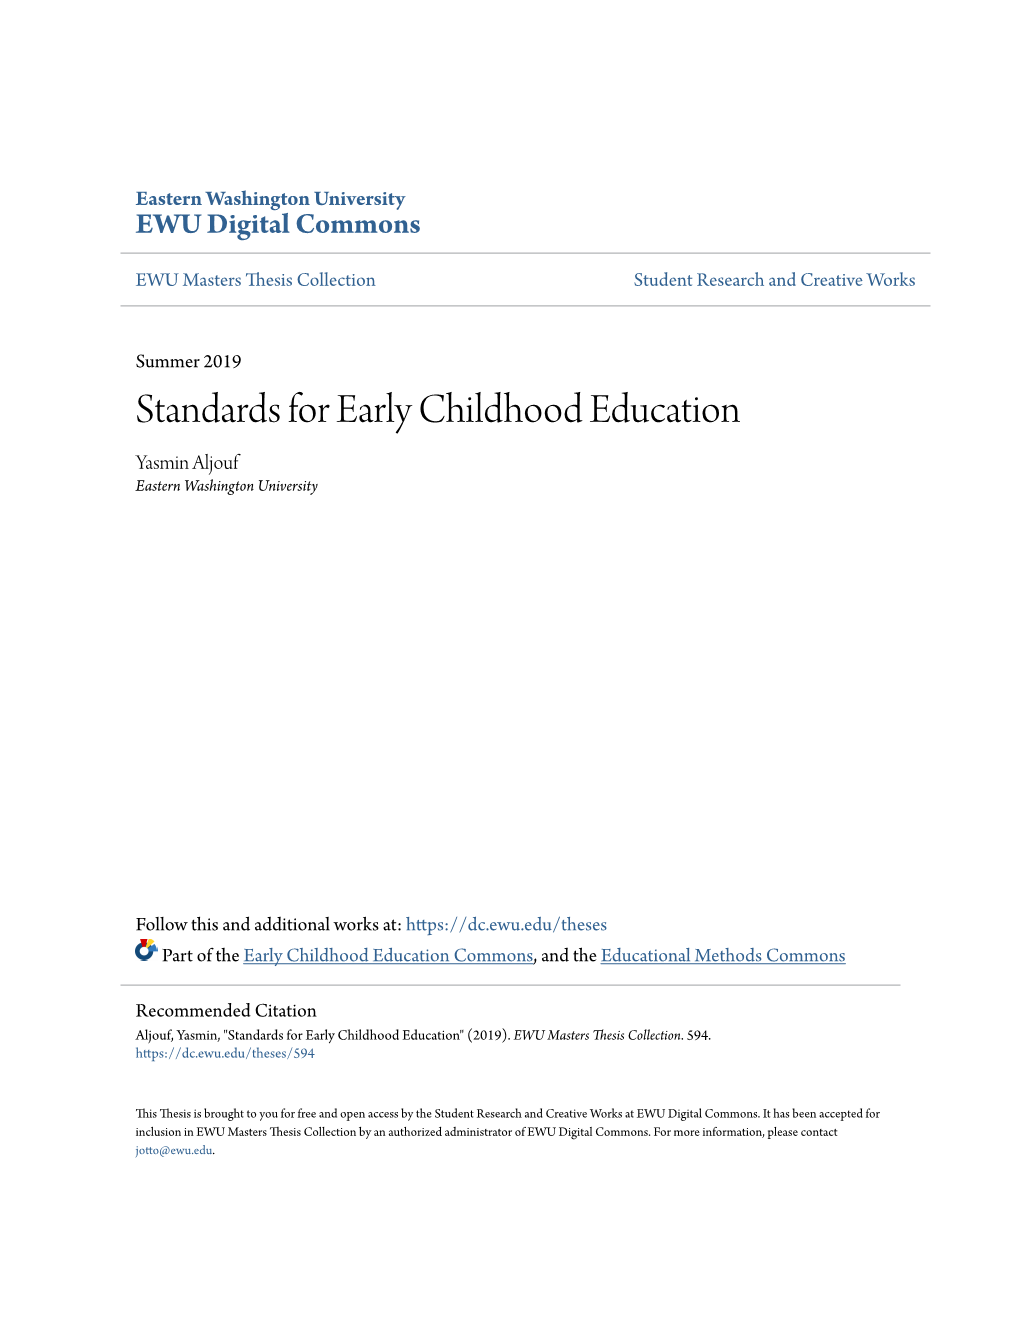 Standards for Early Childhood Education Yasmin Aljouf Eastern Washington University